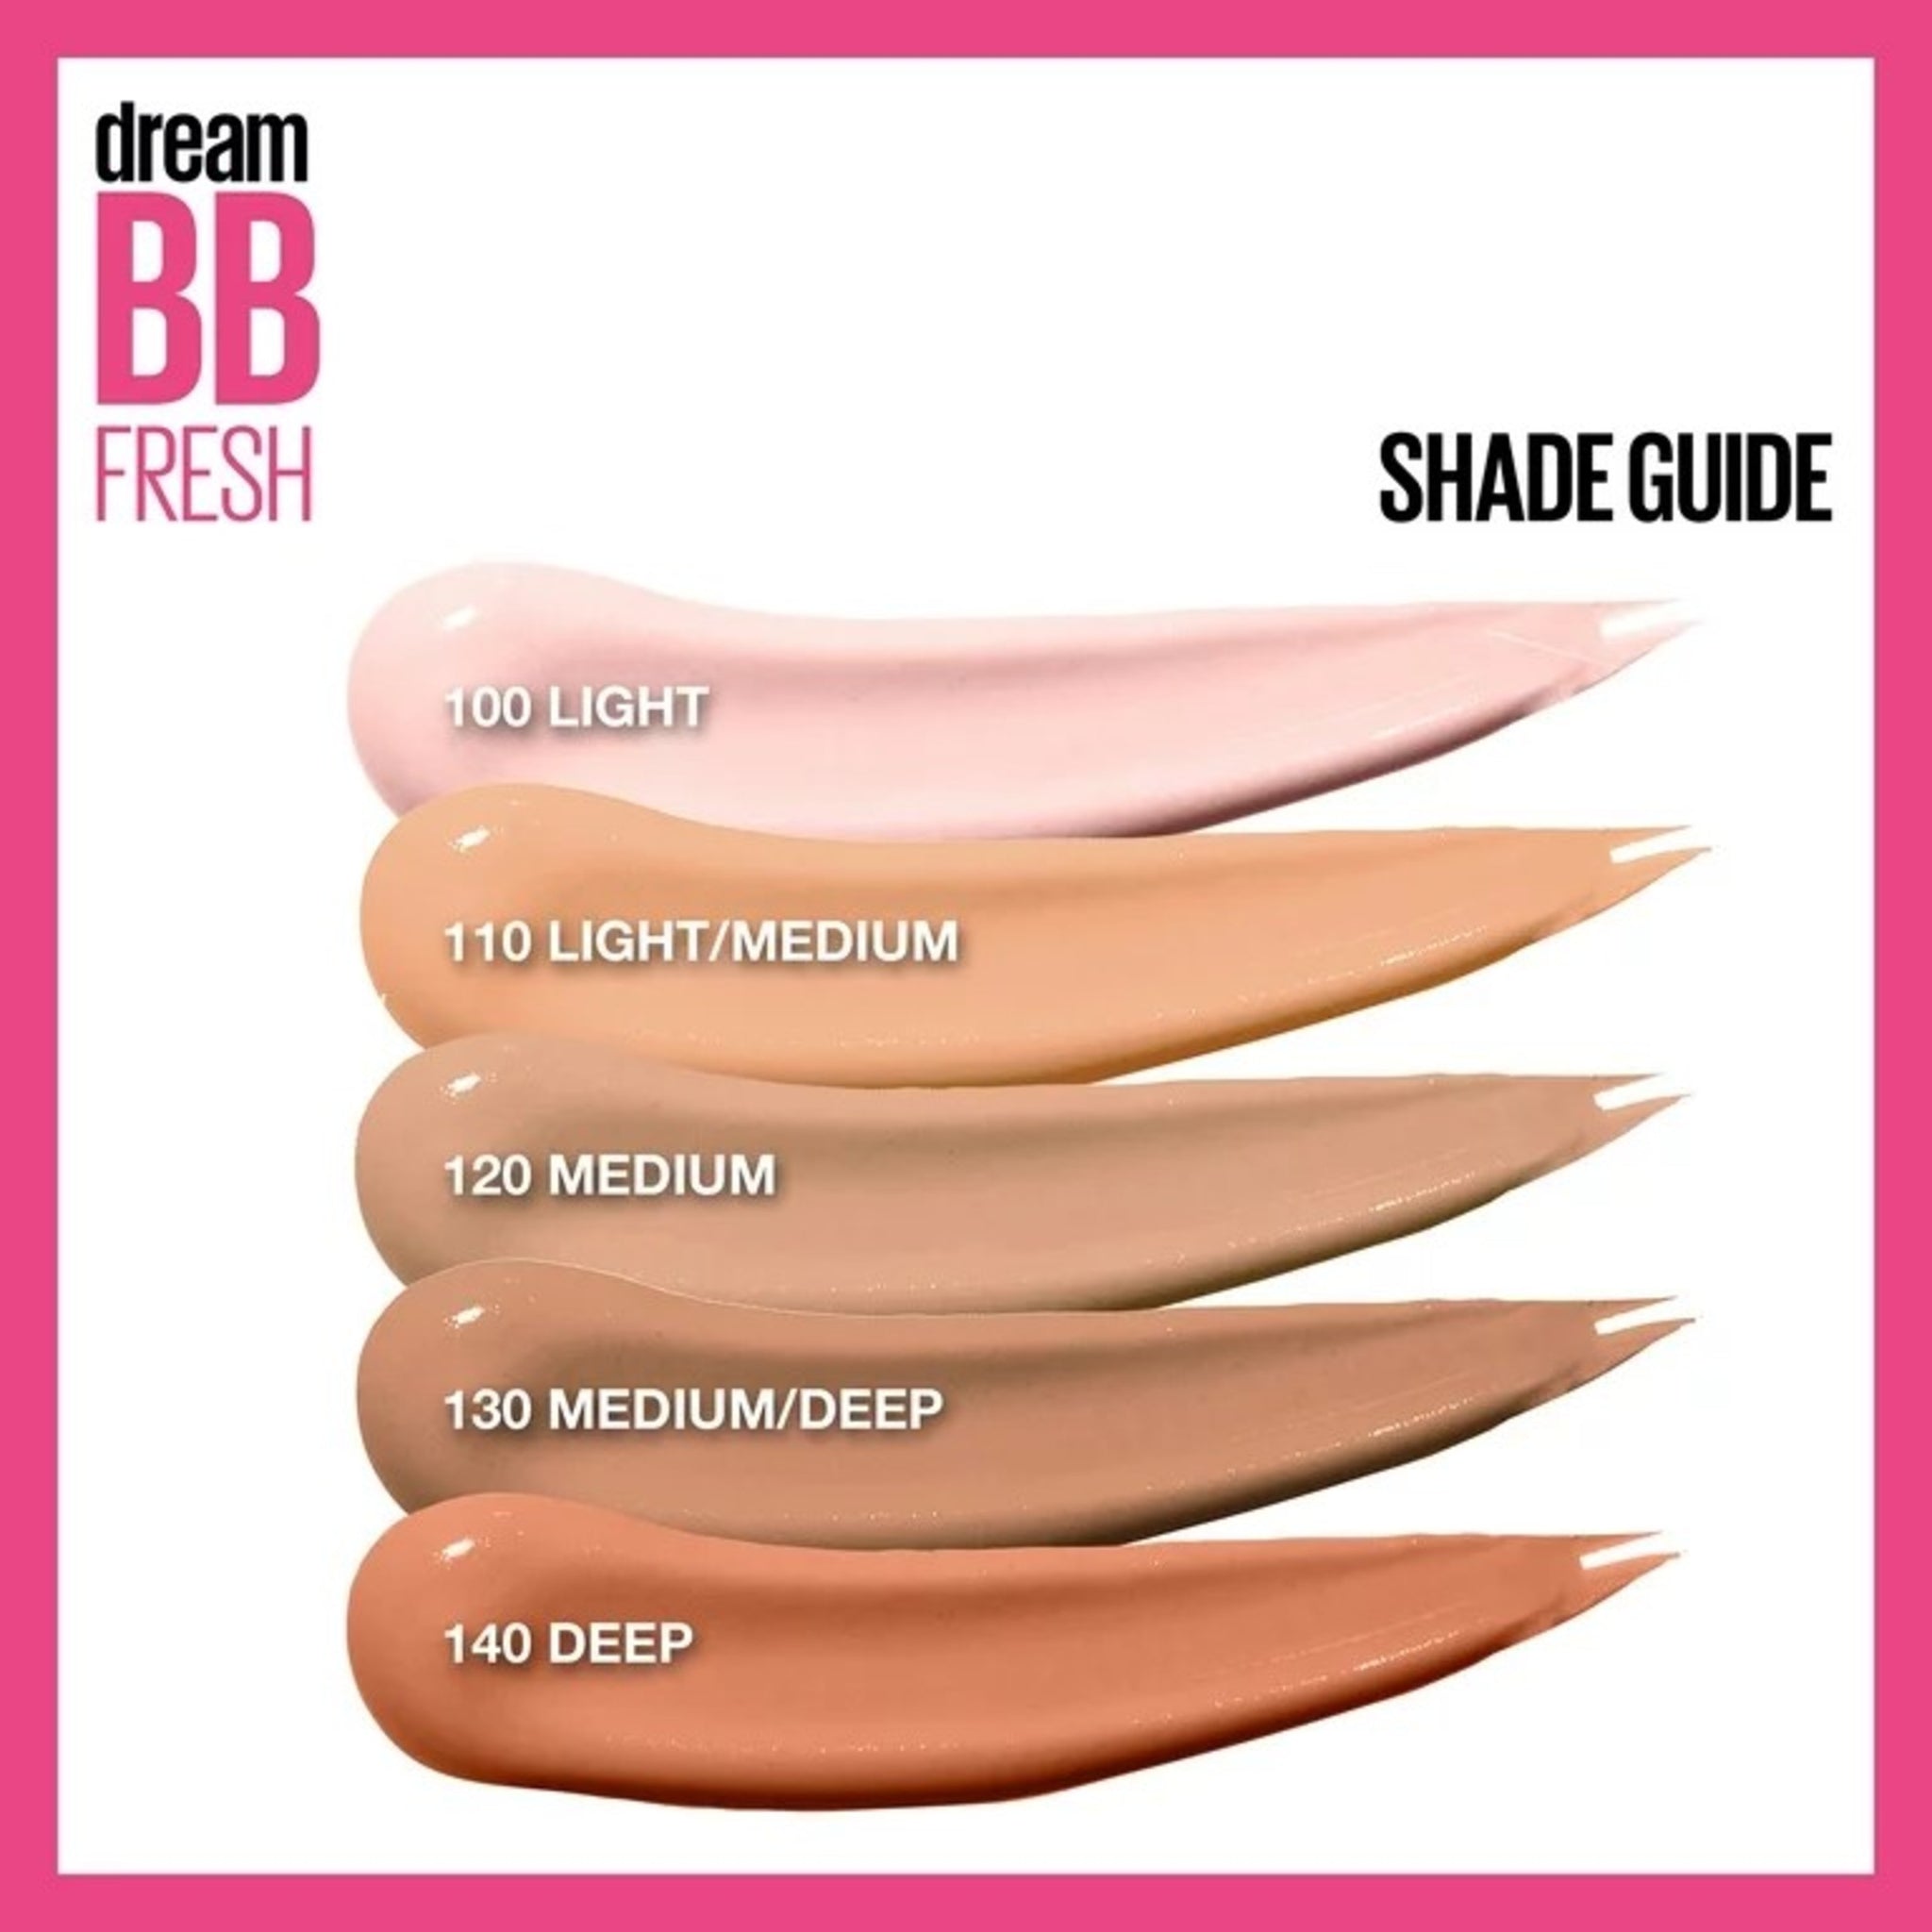 Dream BB Fresh 8-In-1 Beauty Balm SPF 30 Sheer Tint